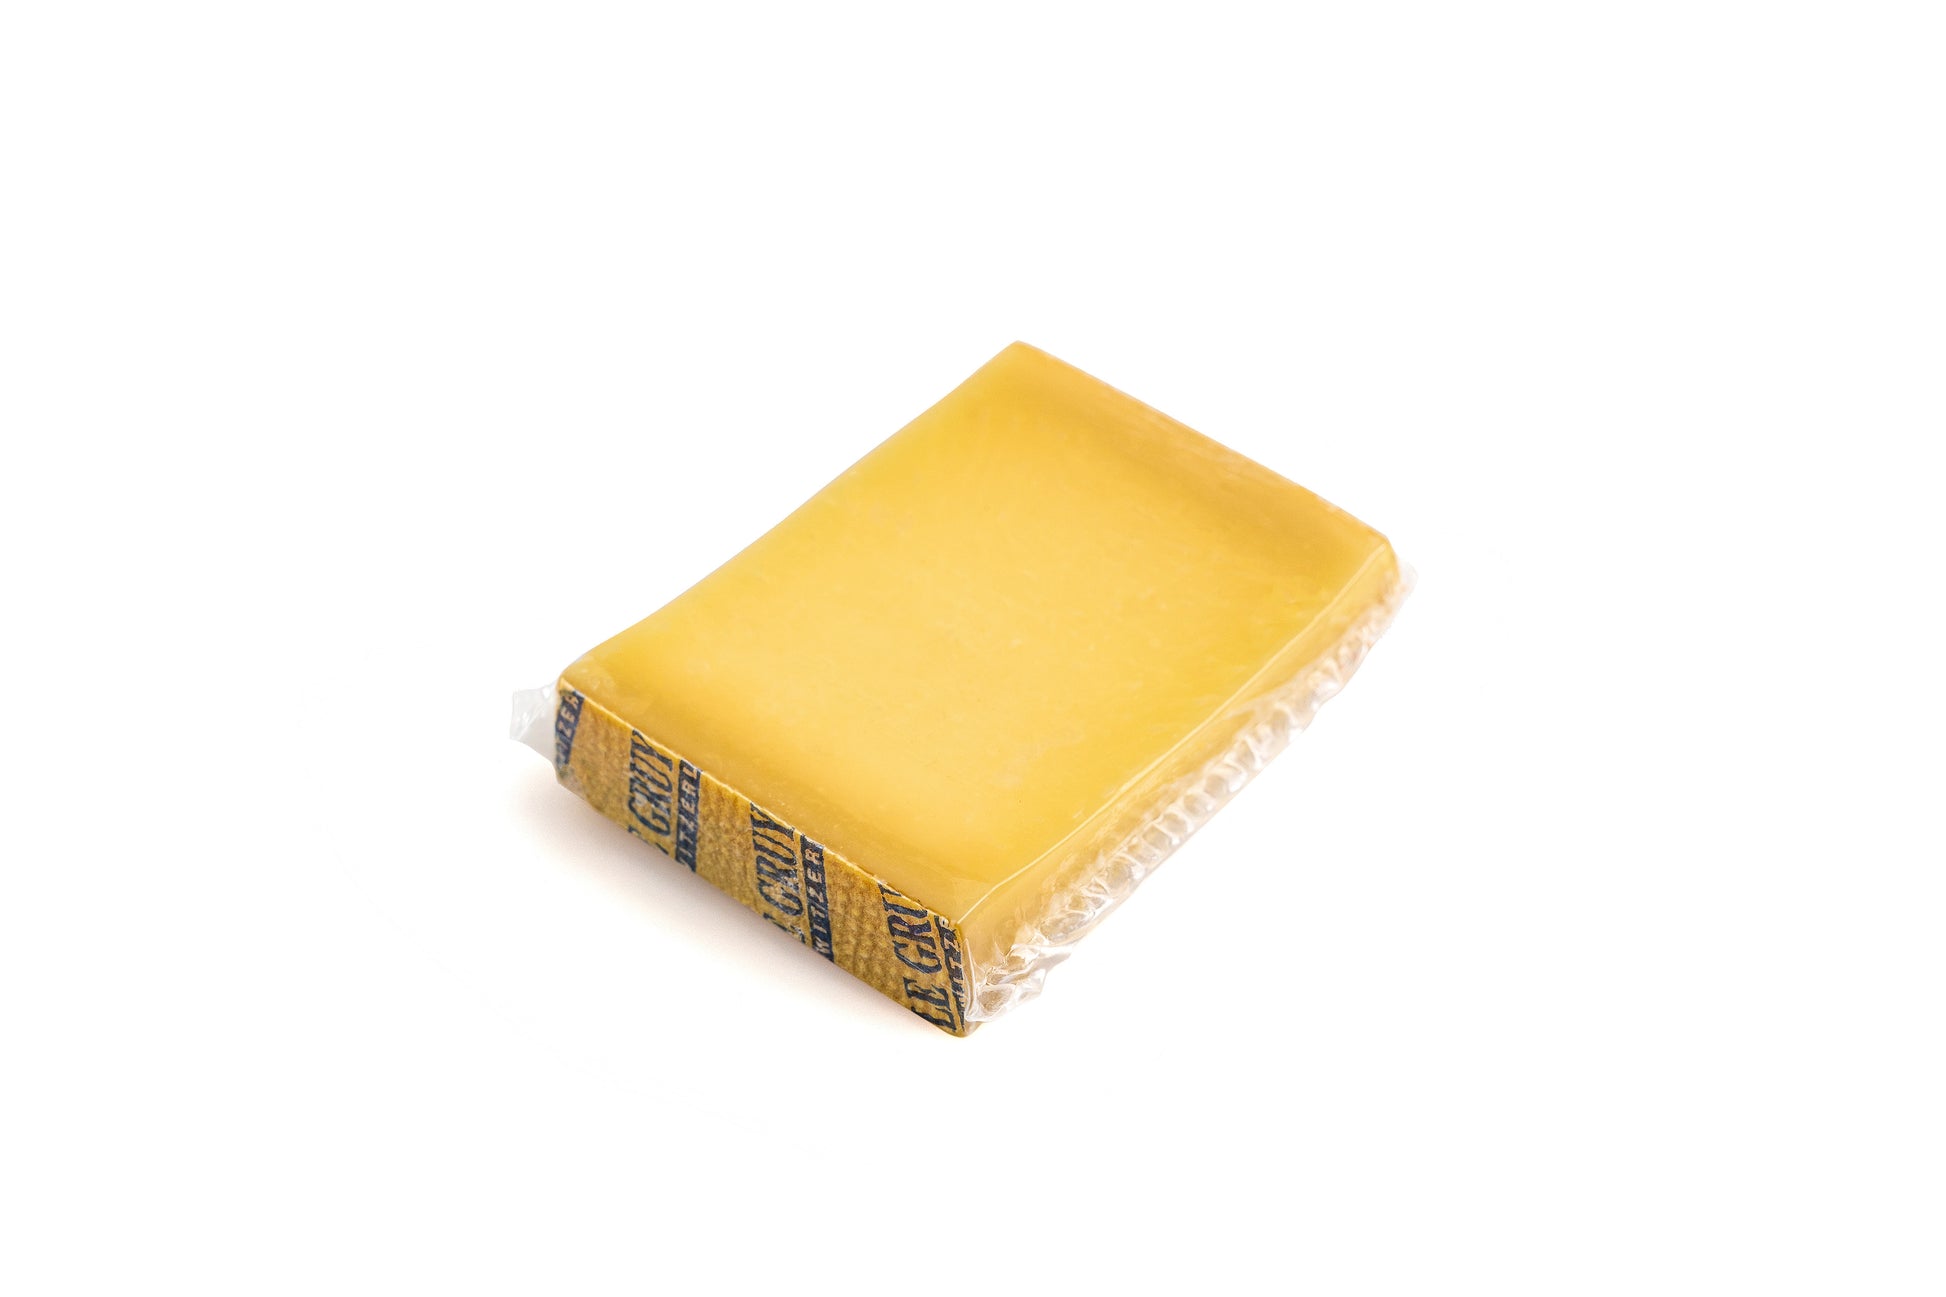 Diversey Cryovac Sandwich Bags, 1.15 mil, 6.5 x 5.88, Clear, 1080/Carton  (100946906)